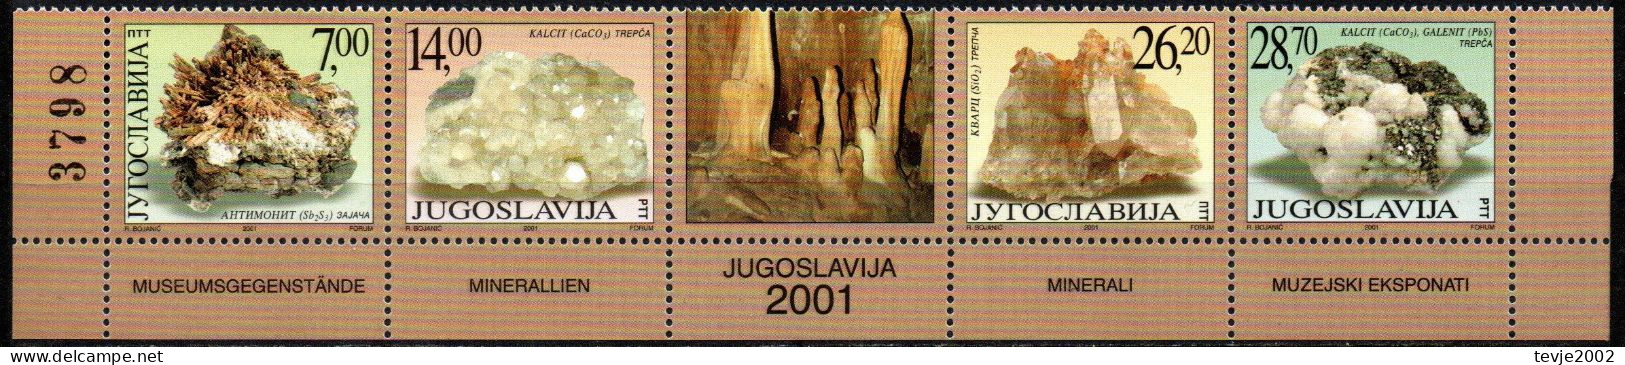 Jugoslawien 2001 - Mi.Nr. 3047 - 3050 - Postfrisch MNH - Mineralien Minerals - Minéraux